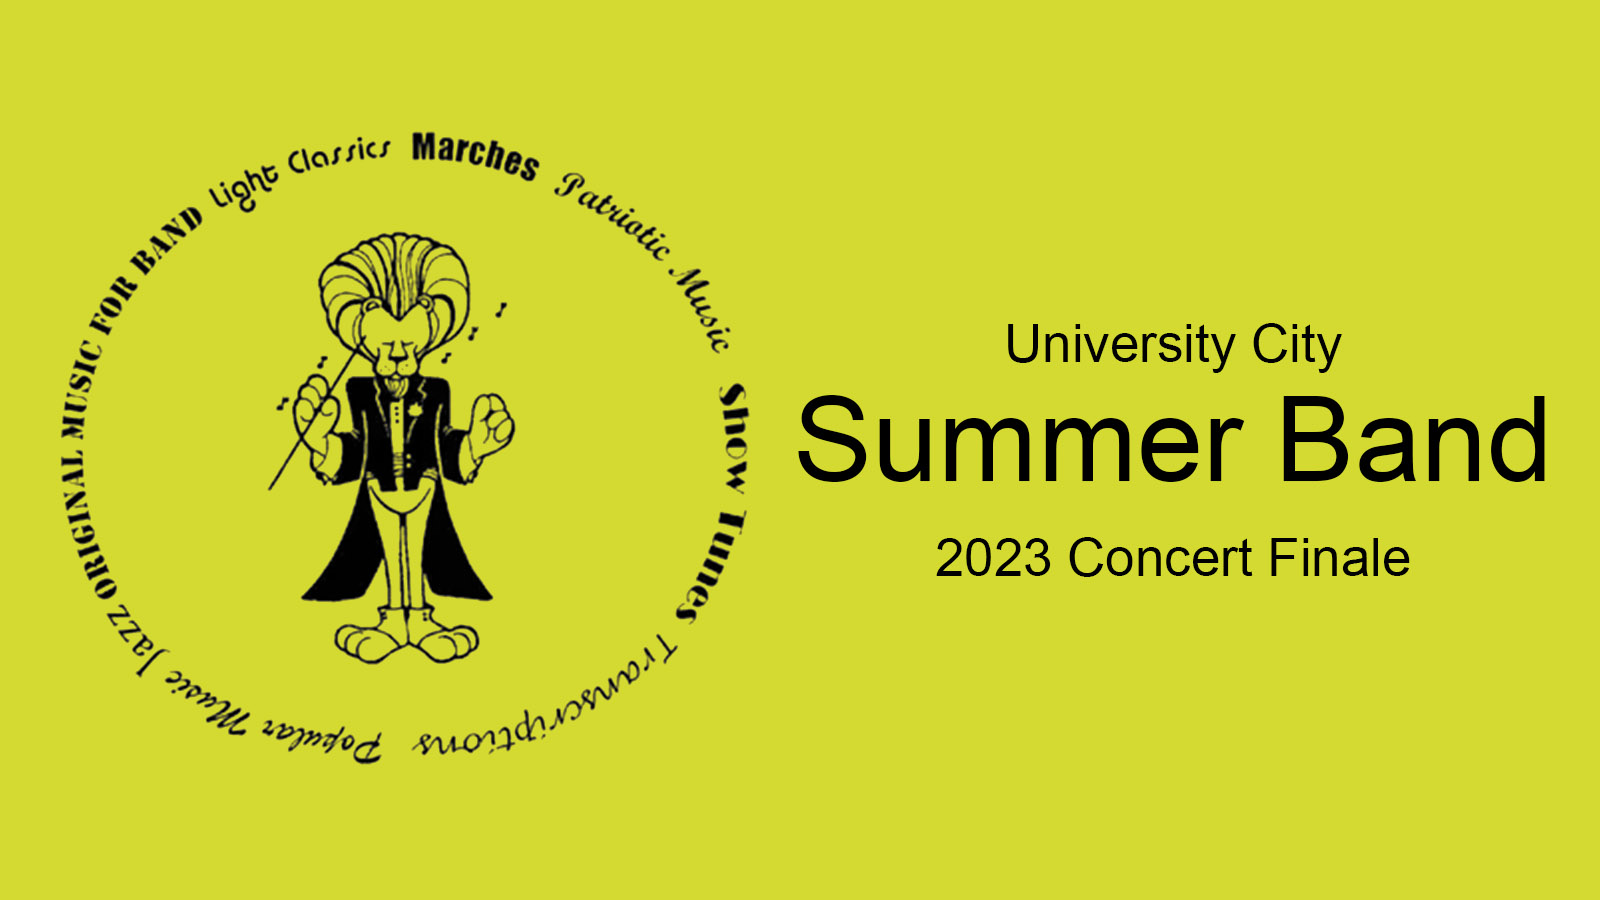 University City Summer Band Concert Finale